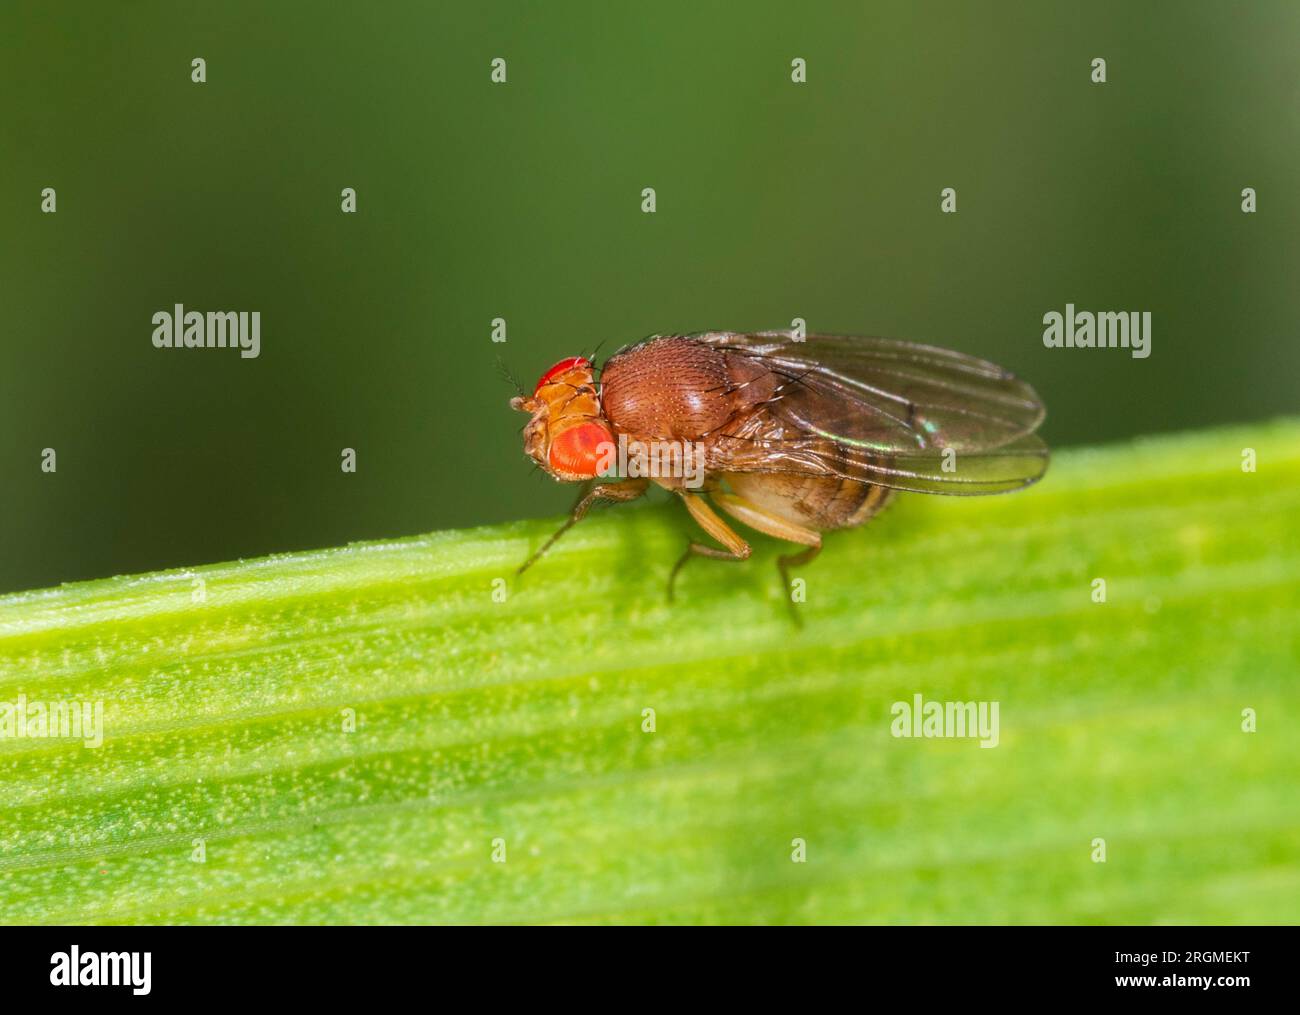 Diminutive, red eyed vinegar fly, Drosophila immigrans, in a UK garden Stock Photo